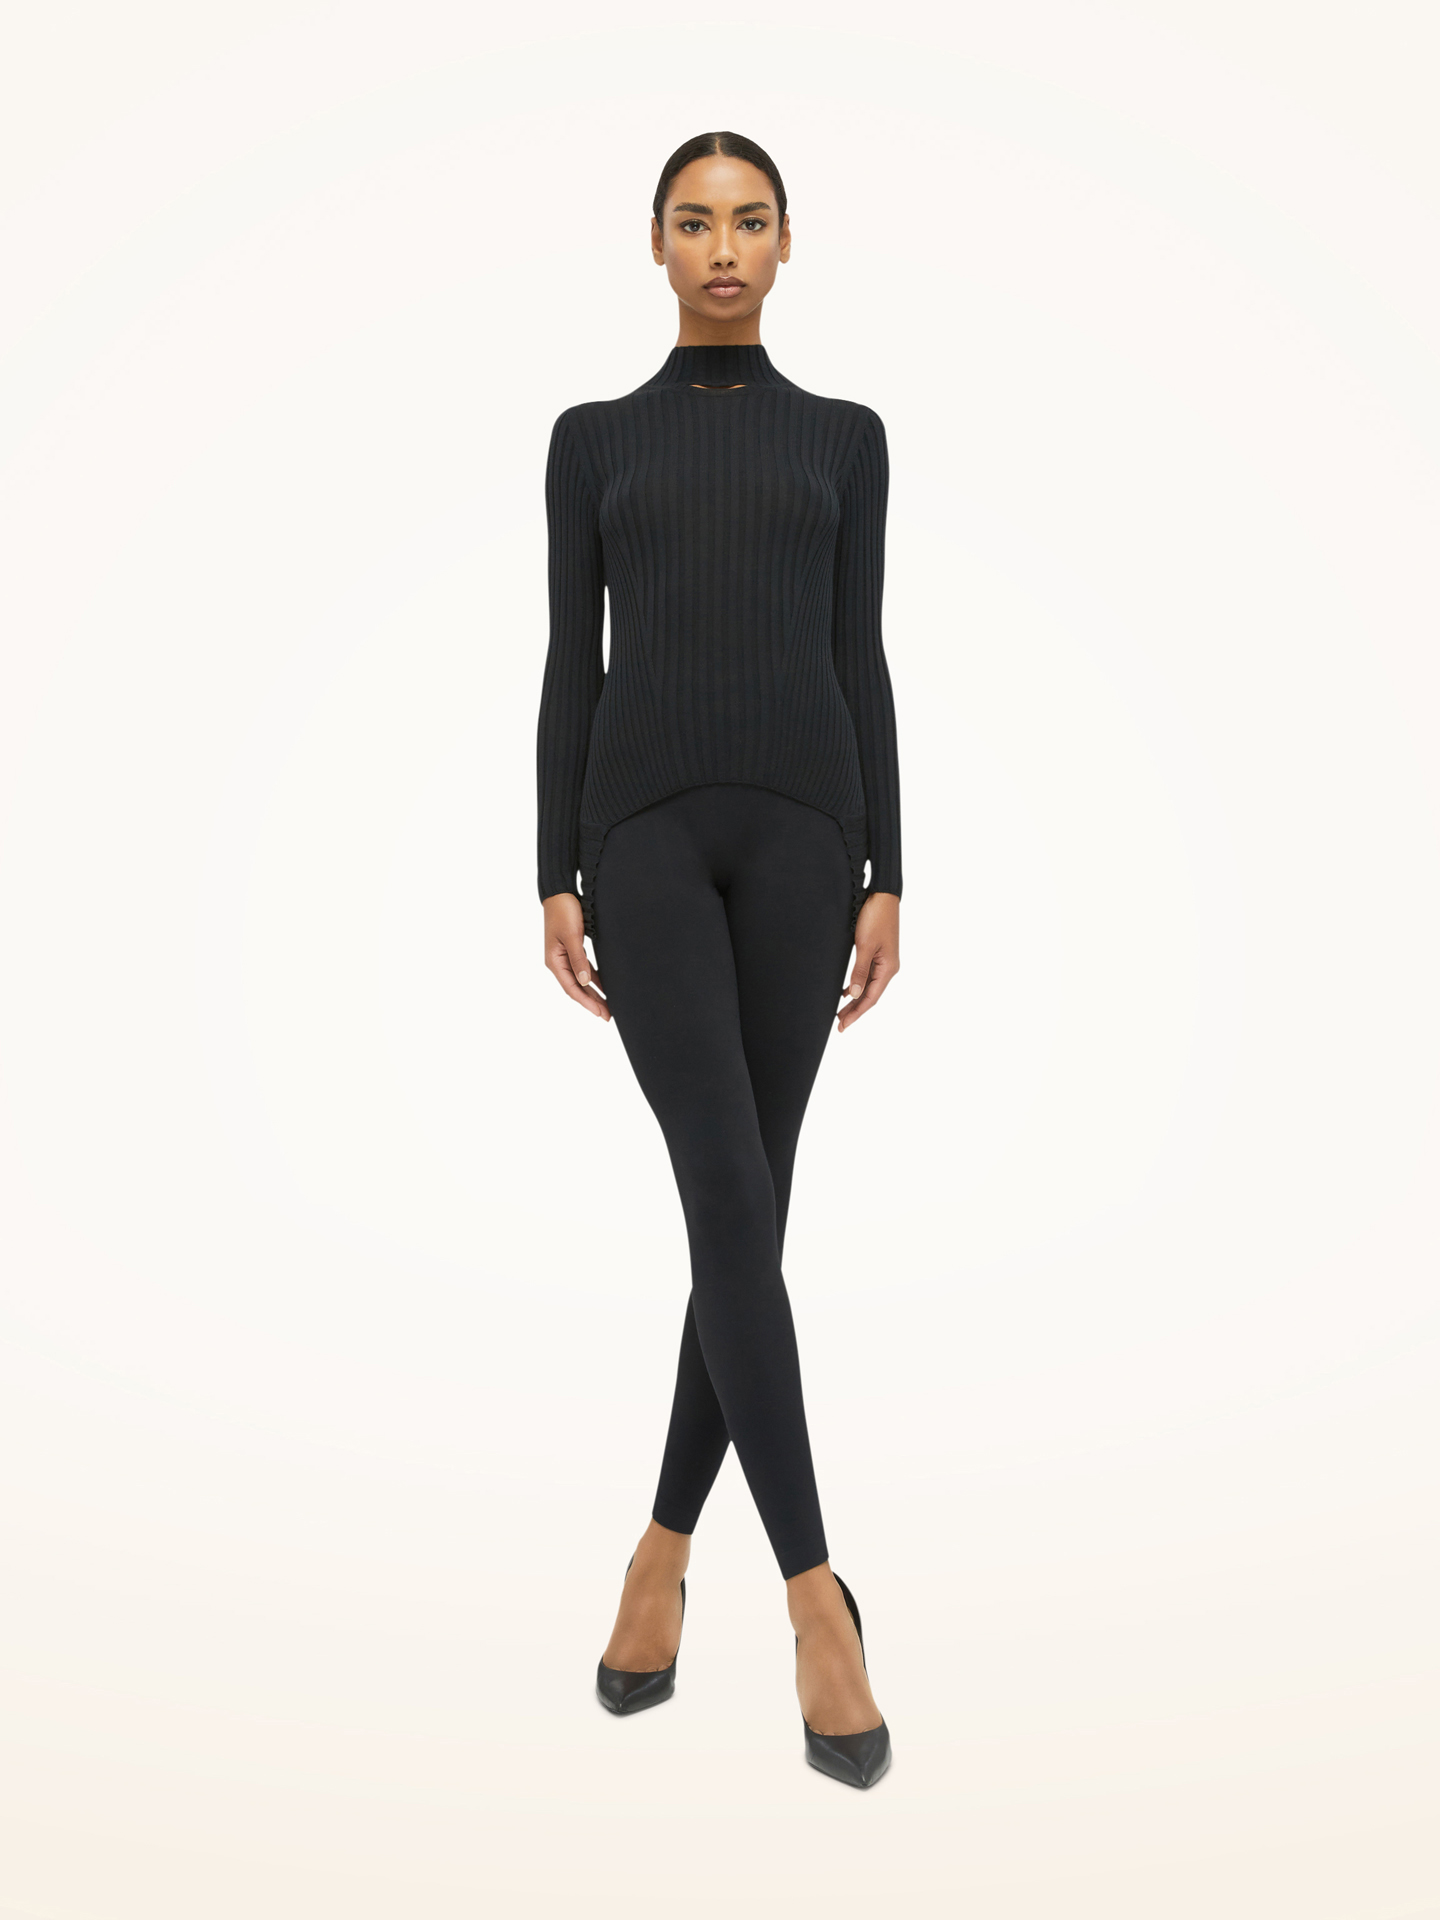 Wolford - Cashmere Top Long Sleeves, Frau, black, Größe: XS von Wolford